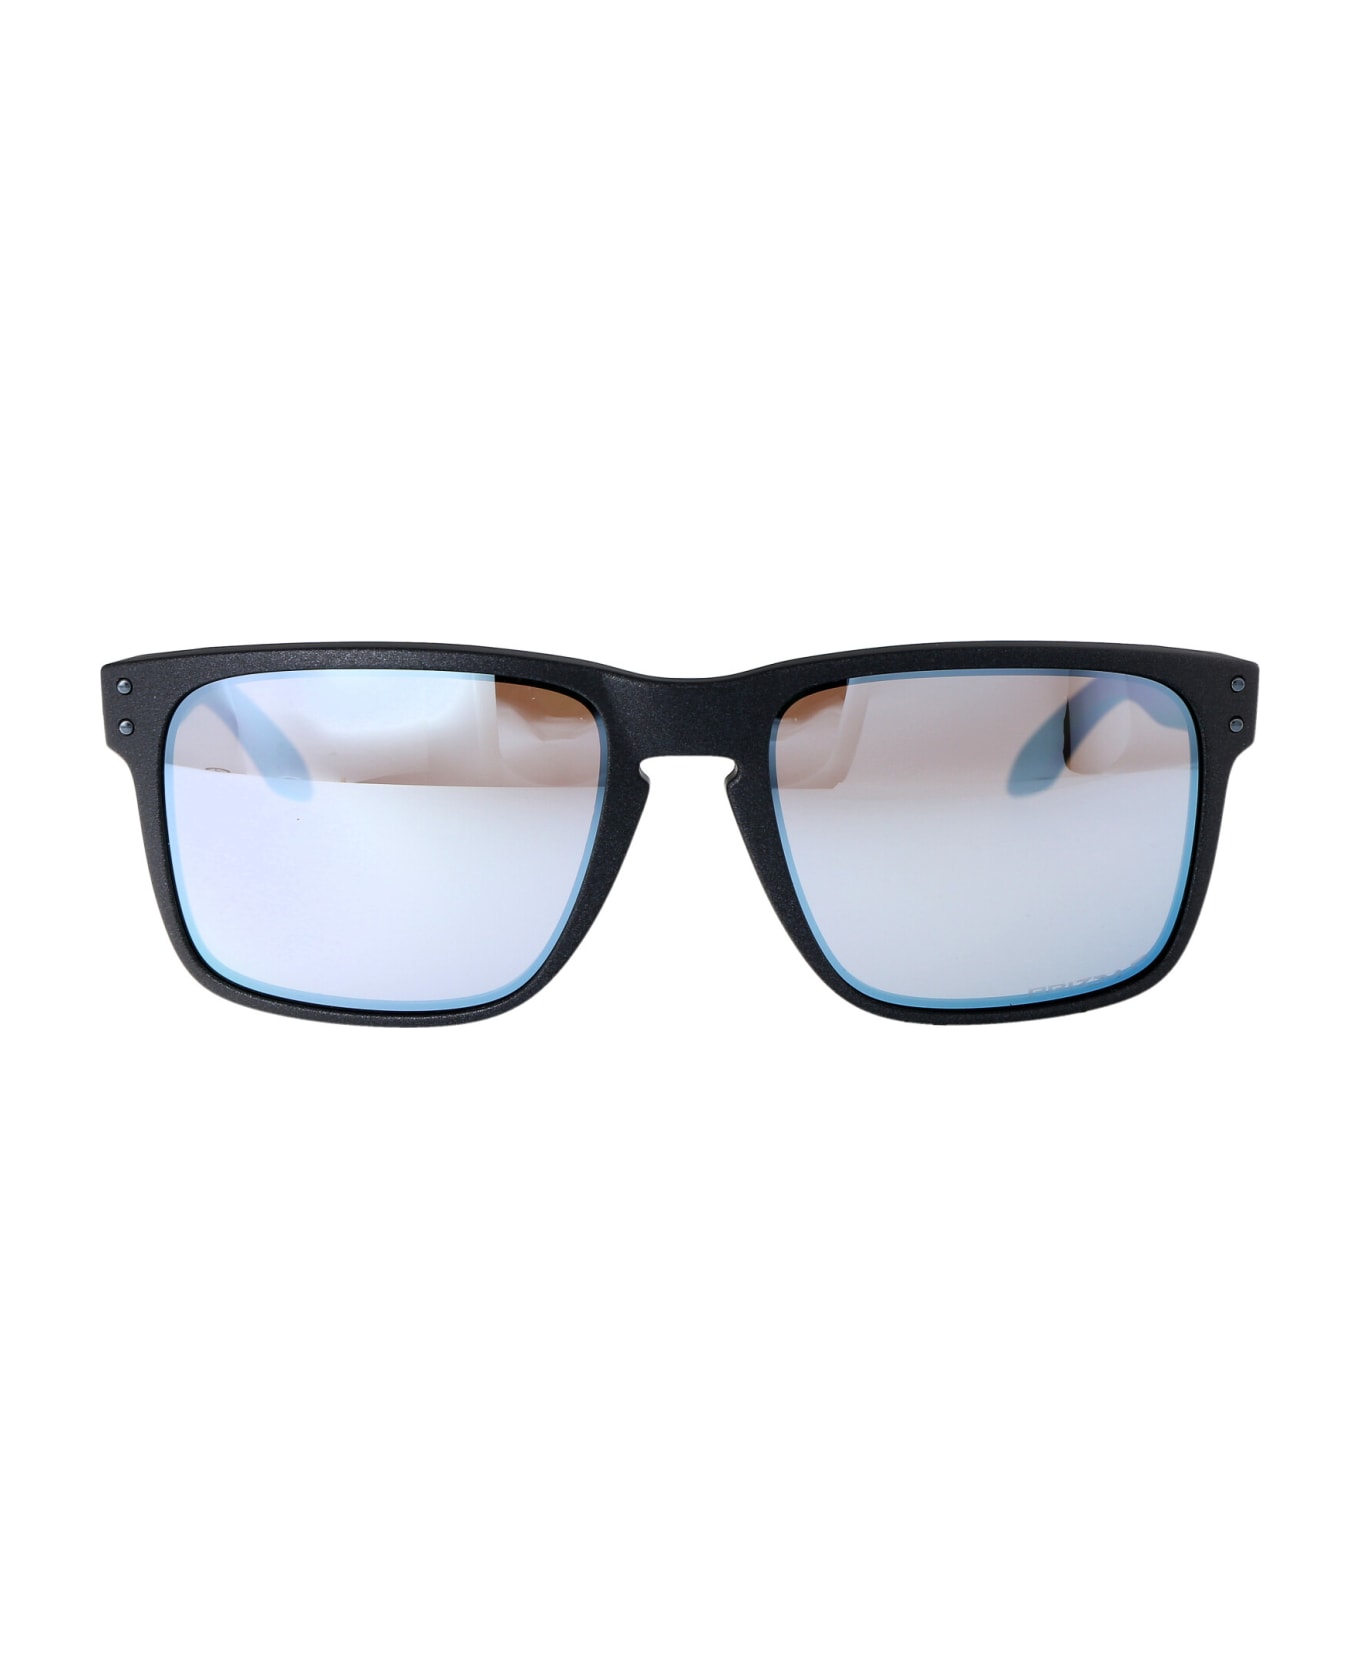 Oakley Holbrook Xl Sunglasses - 941739 Blue Steel サングラス